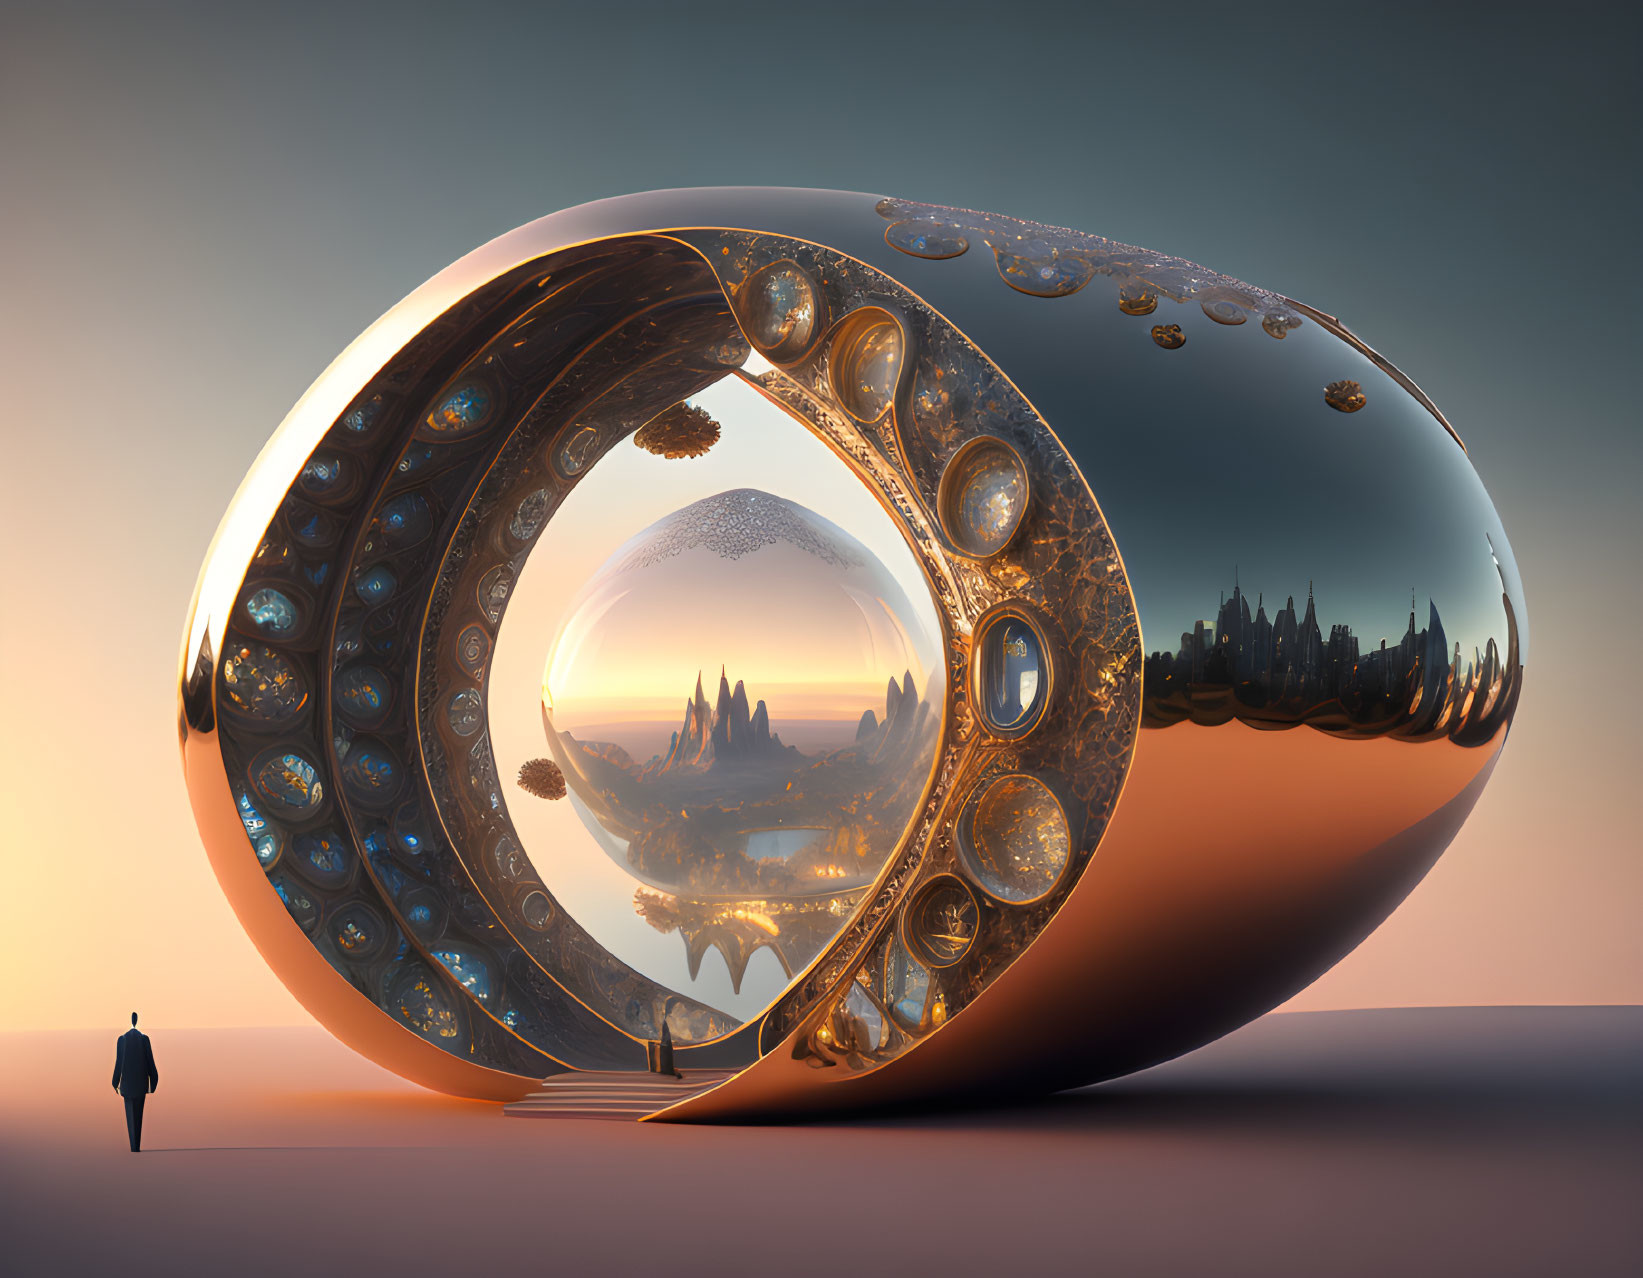 Futuristic bean-shaped structure against dusky sky